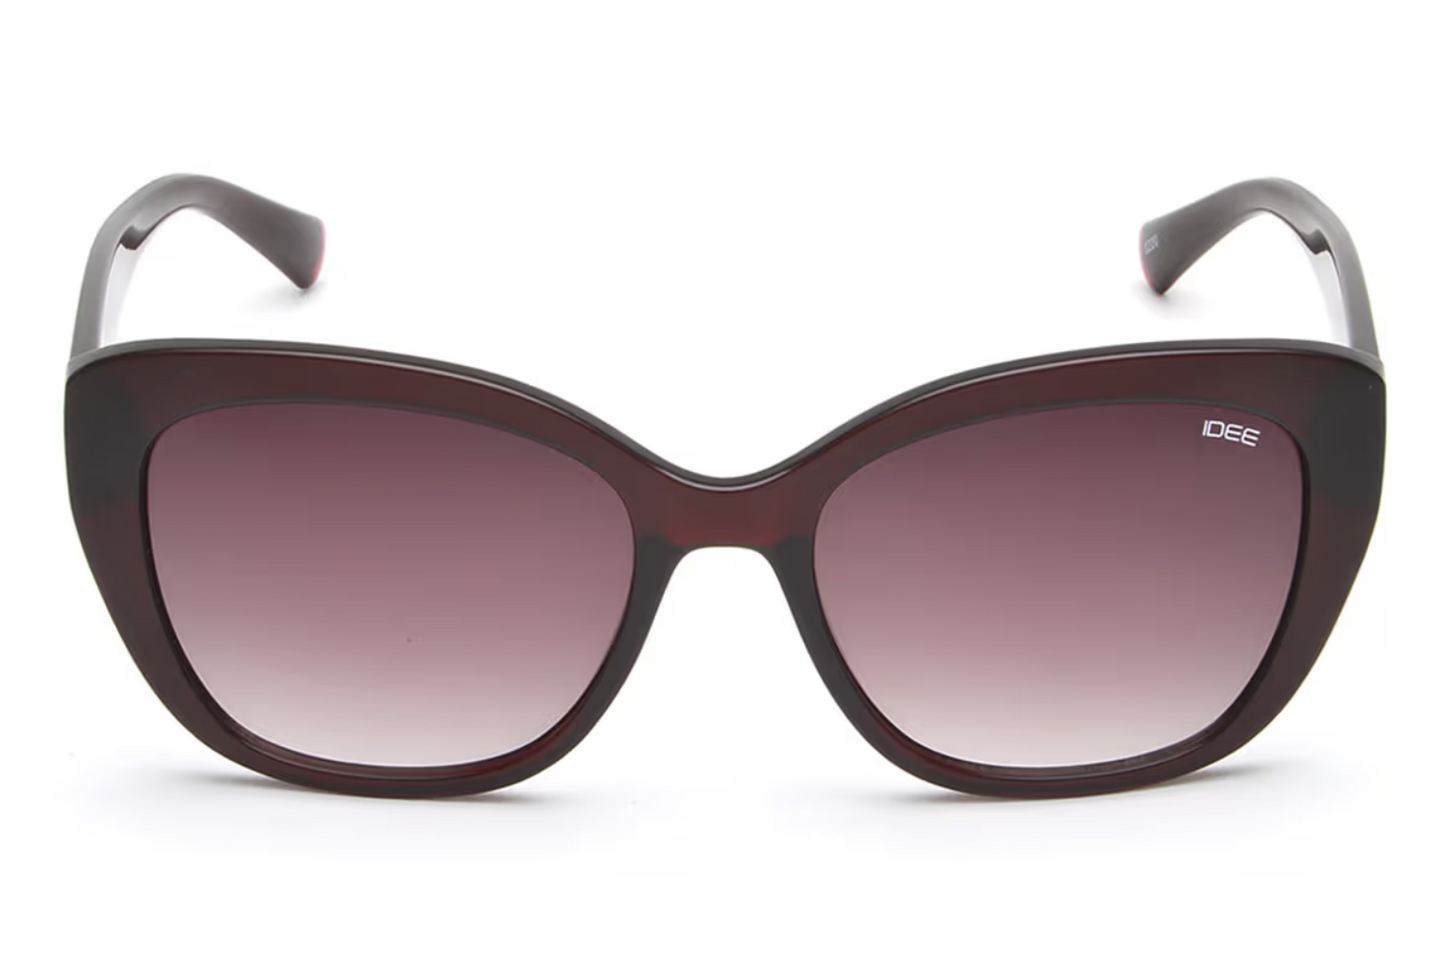 IDEE Sunglasses S2651